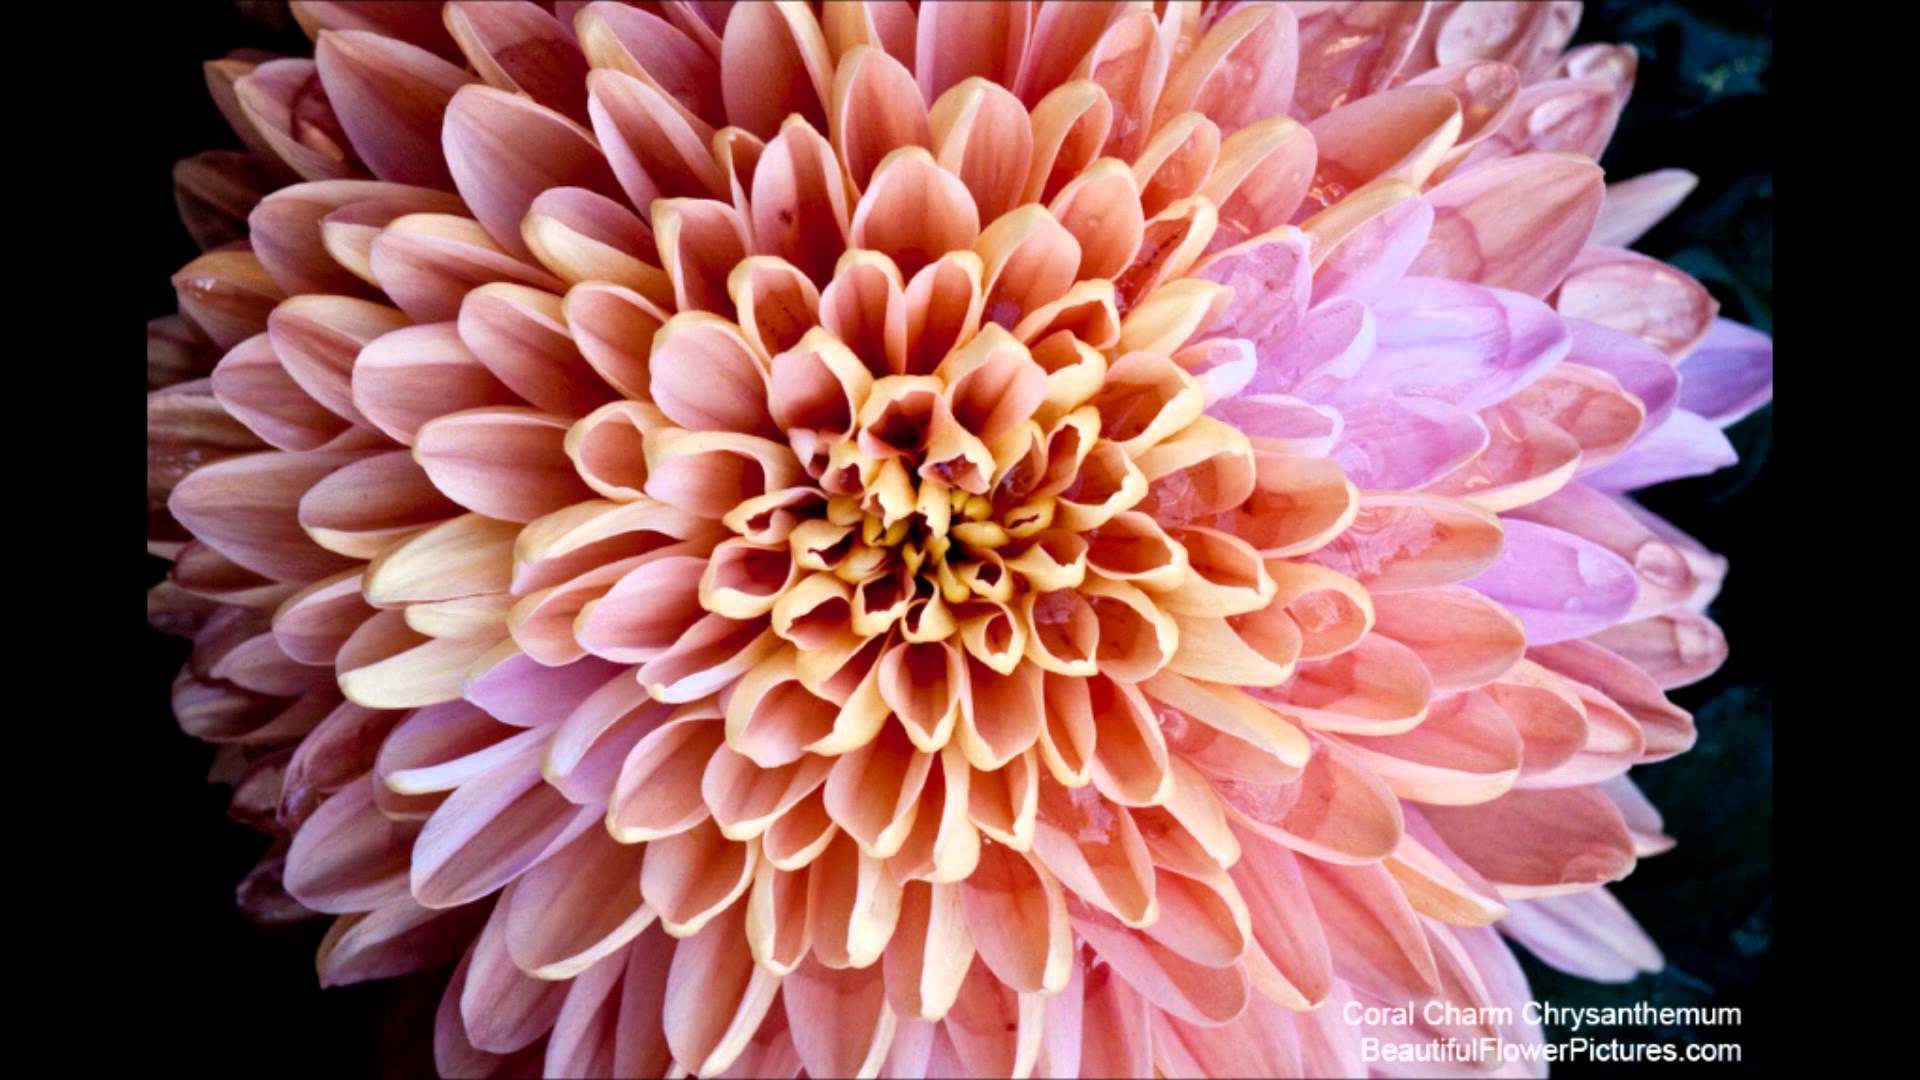 Beautiful Flower Pictures - Chrysanthemum - YouTube